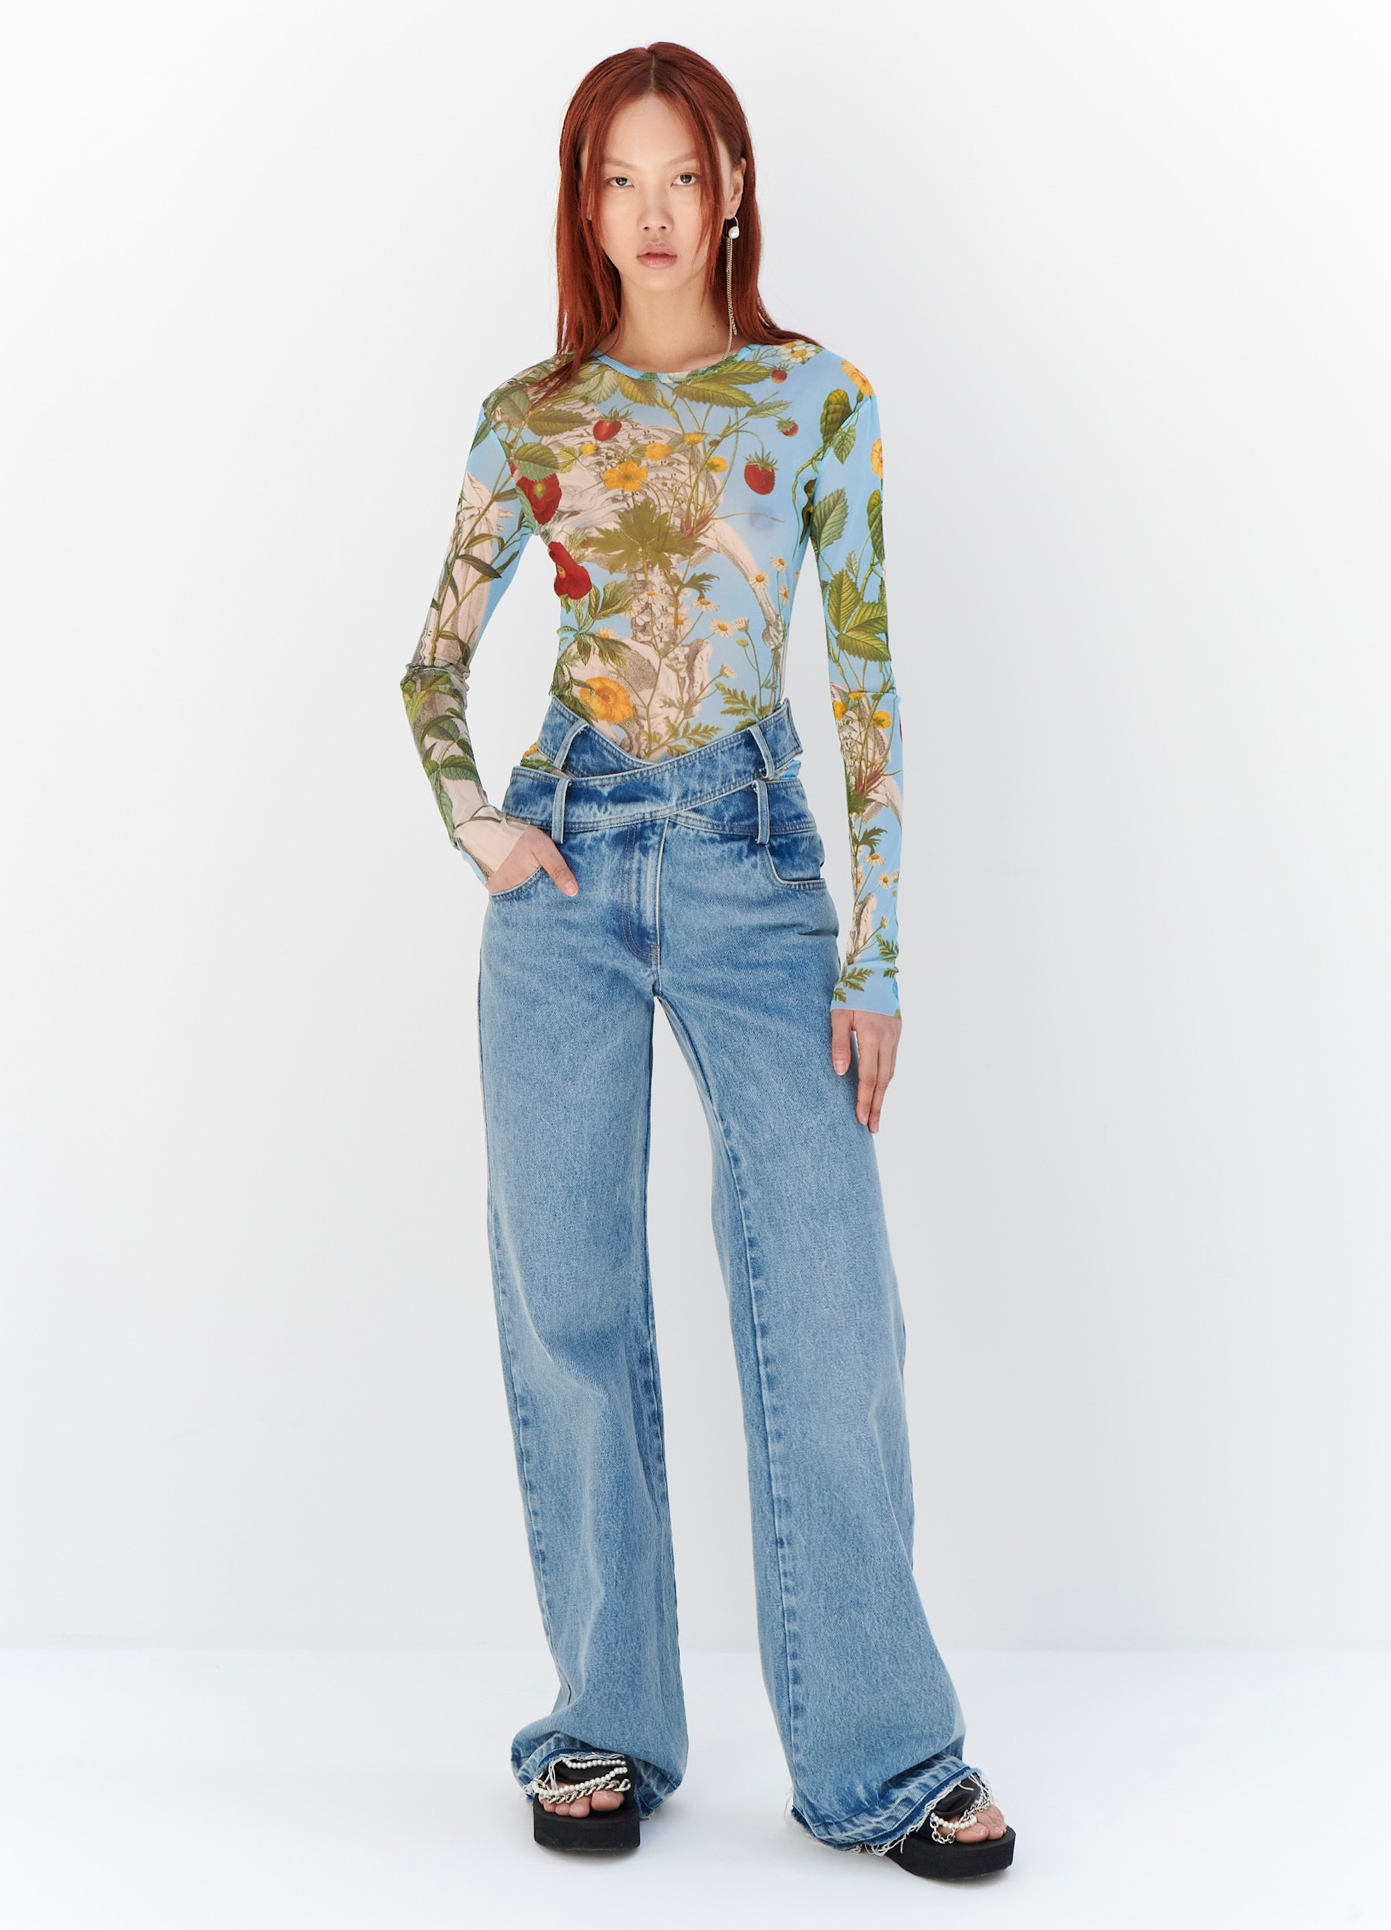 MONSE Criss Cross Waist Jeans in Indigo on model full front view